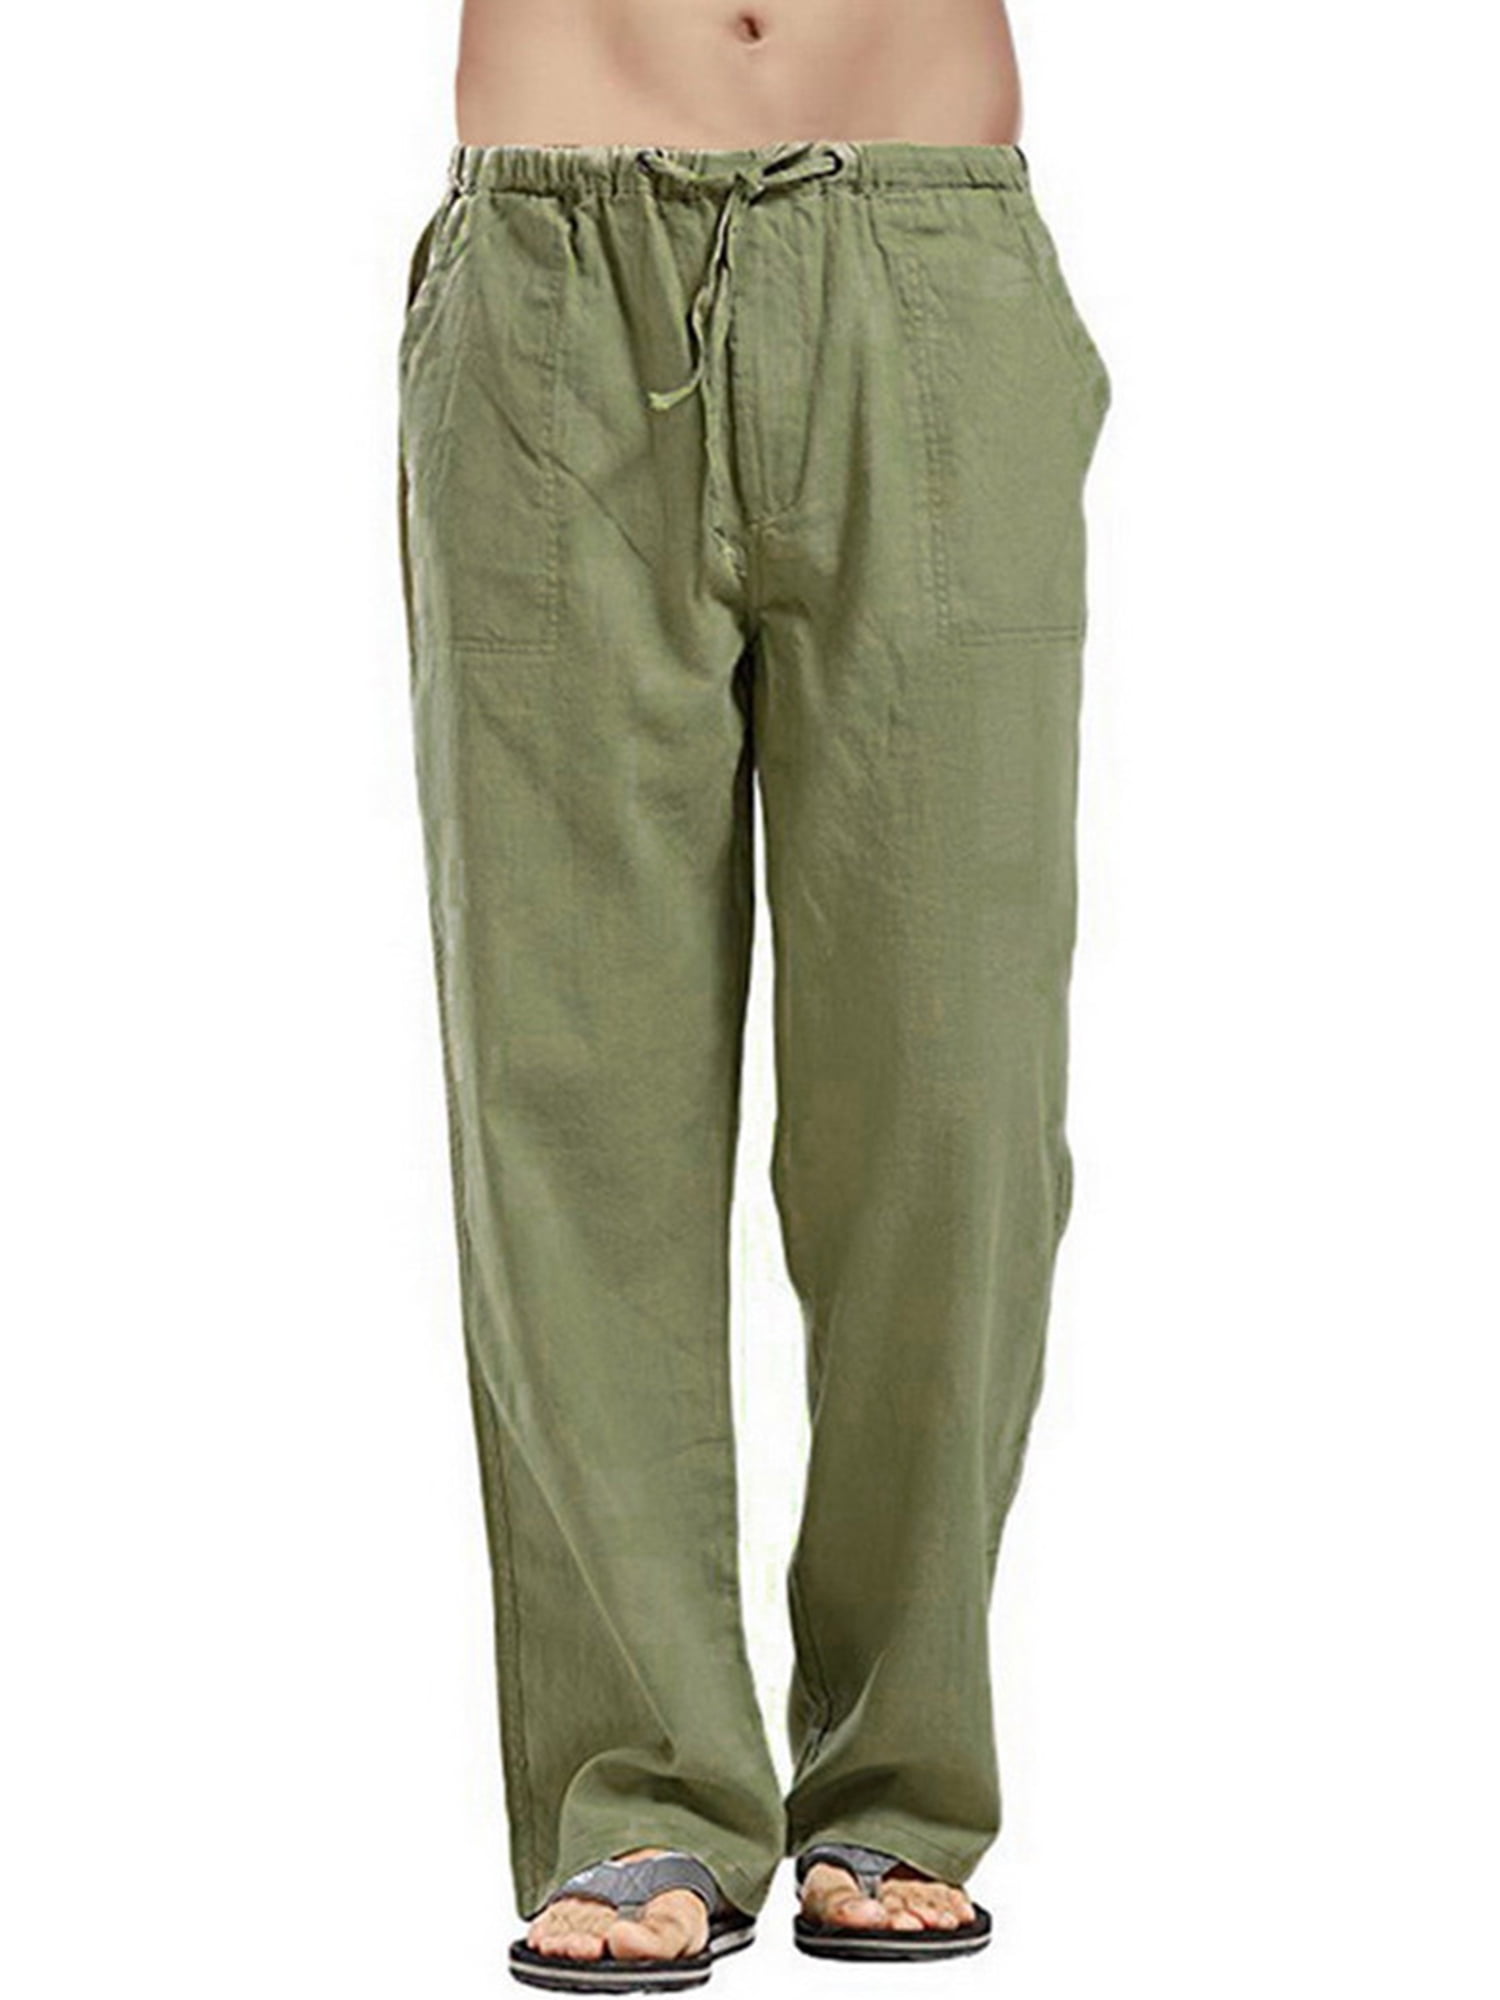 Avamo Mens Cotton Linen Drawstring Pants with Pockets Plus Size 